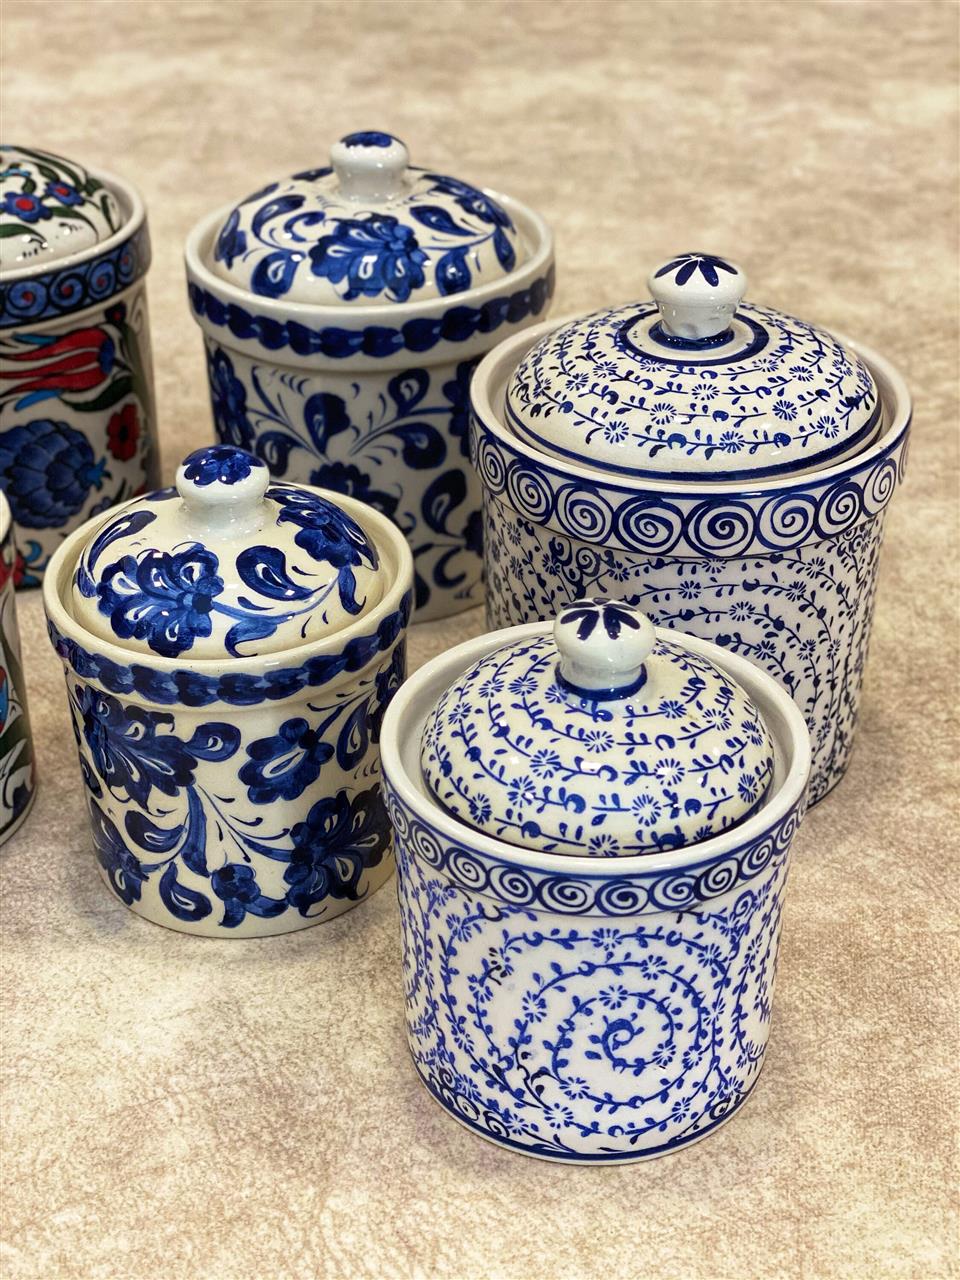 Coffee Jar Sugar Container Set Tea Container 2x Turkish Ceramic Spice Jars With Lid